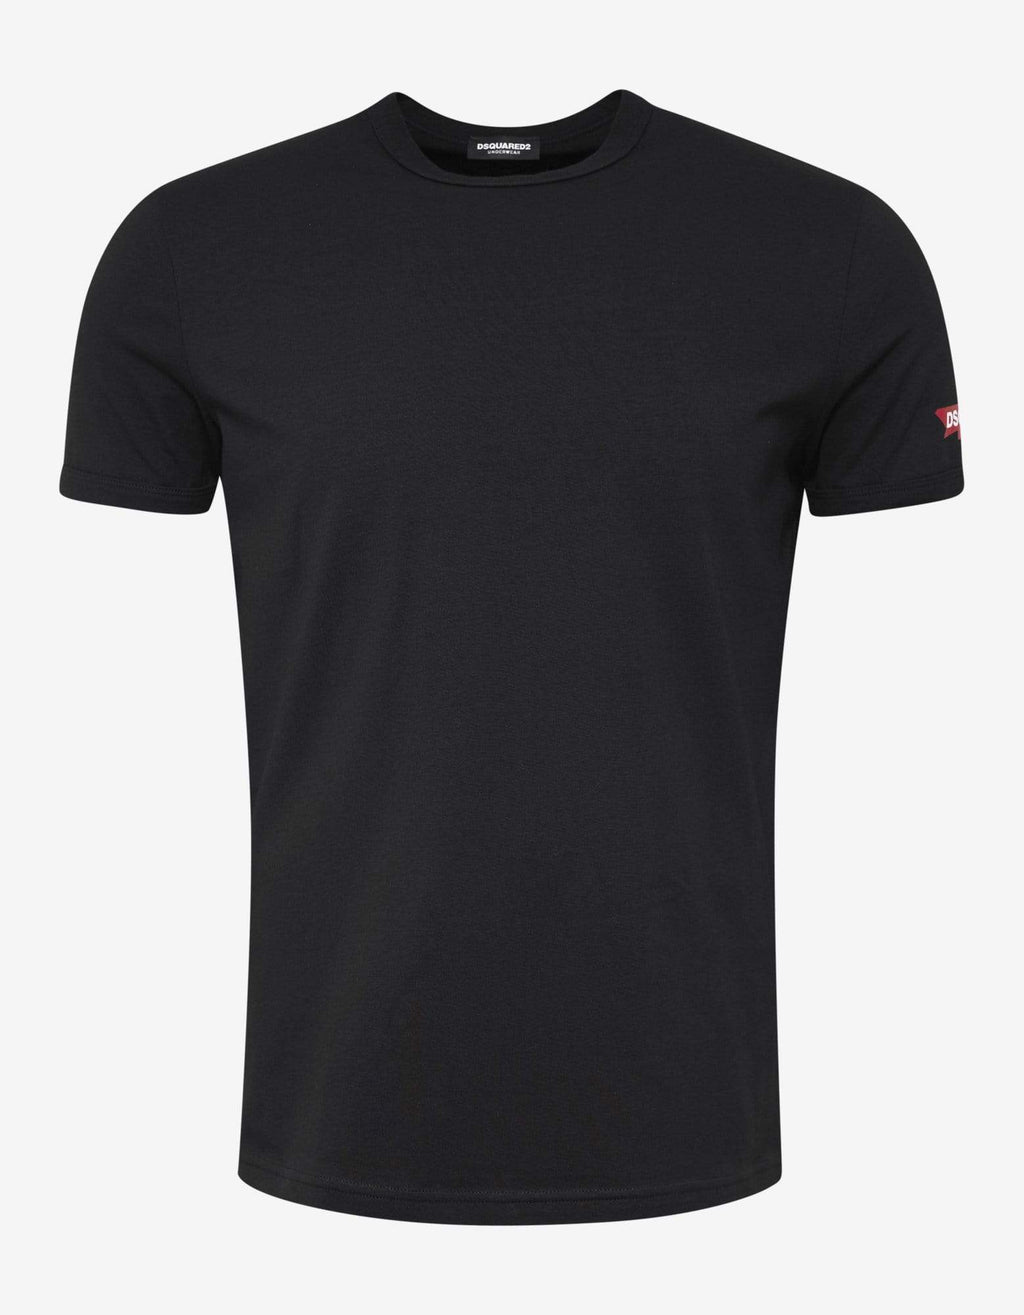 Dsquared2 Dsquared2 Black DSQ2 Sleeve Print T-Shirt